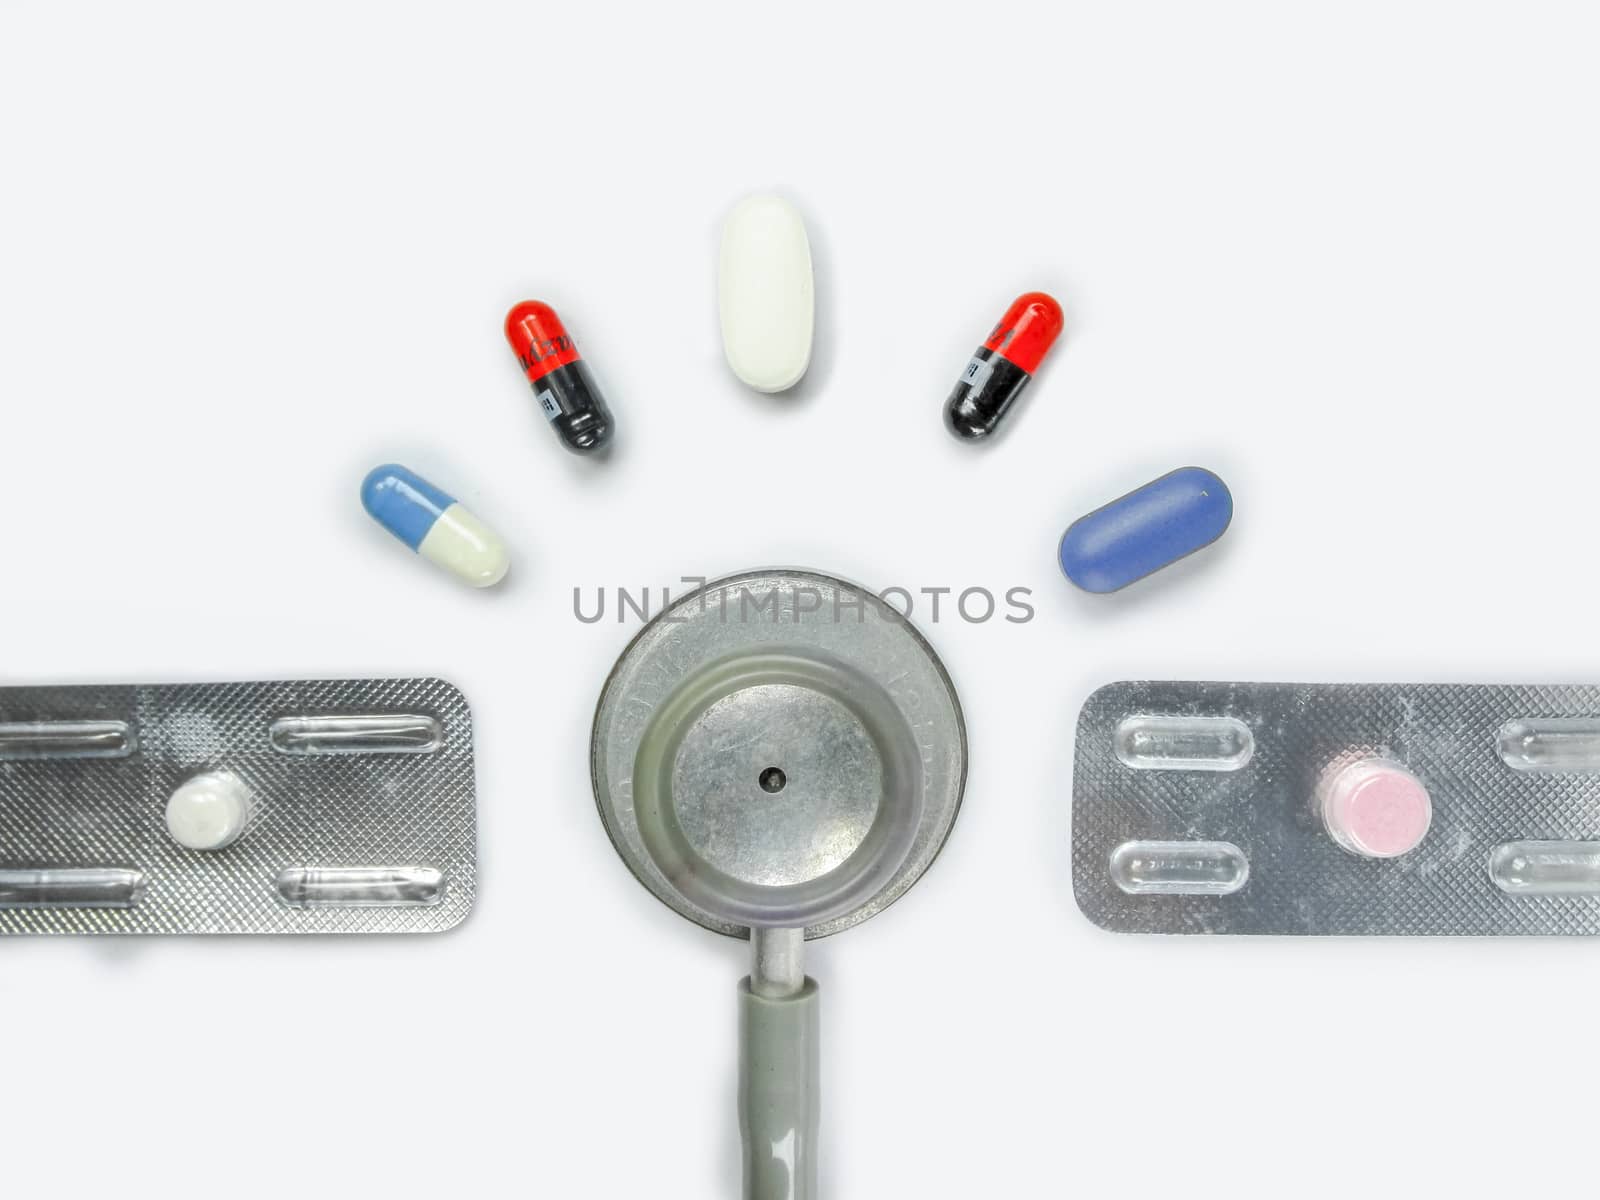 Stethoscope on white,report by drpgayen